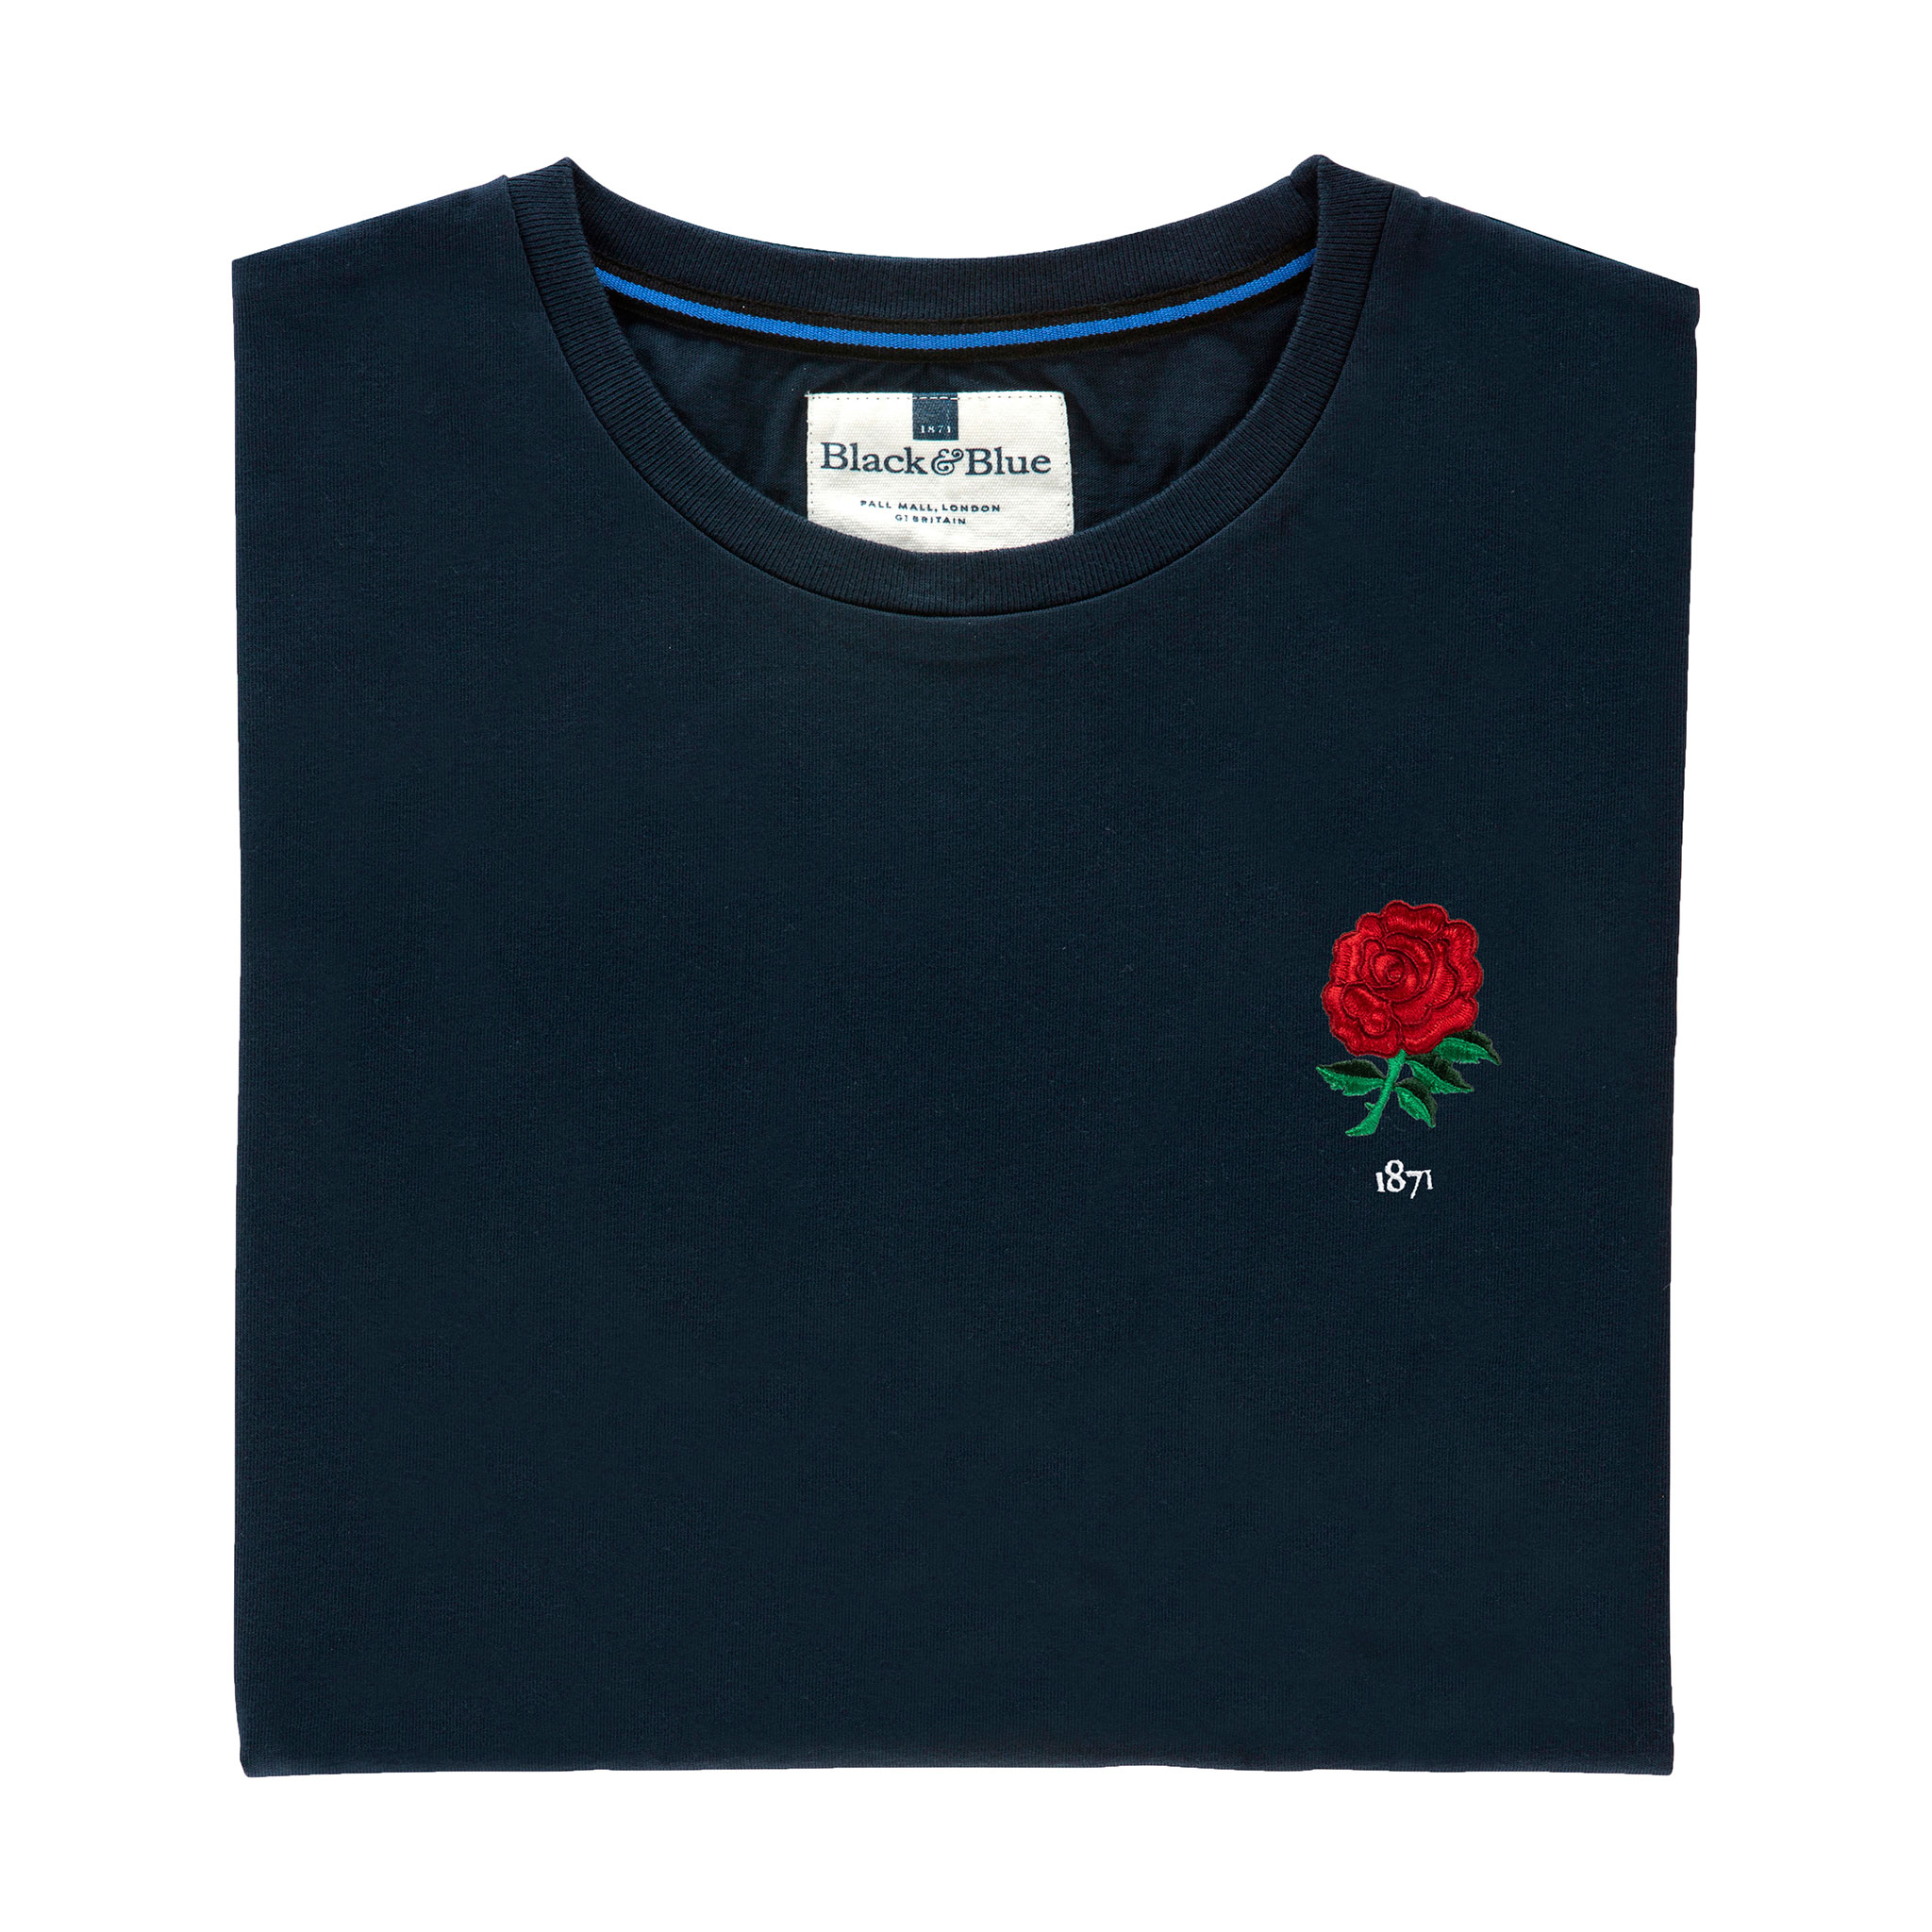 England 1871 Navy T-Shirt_Folded